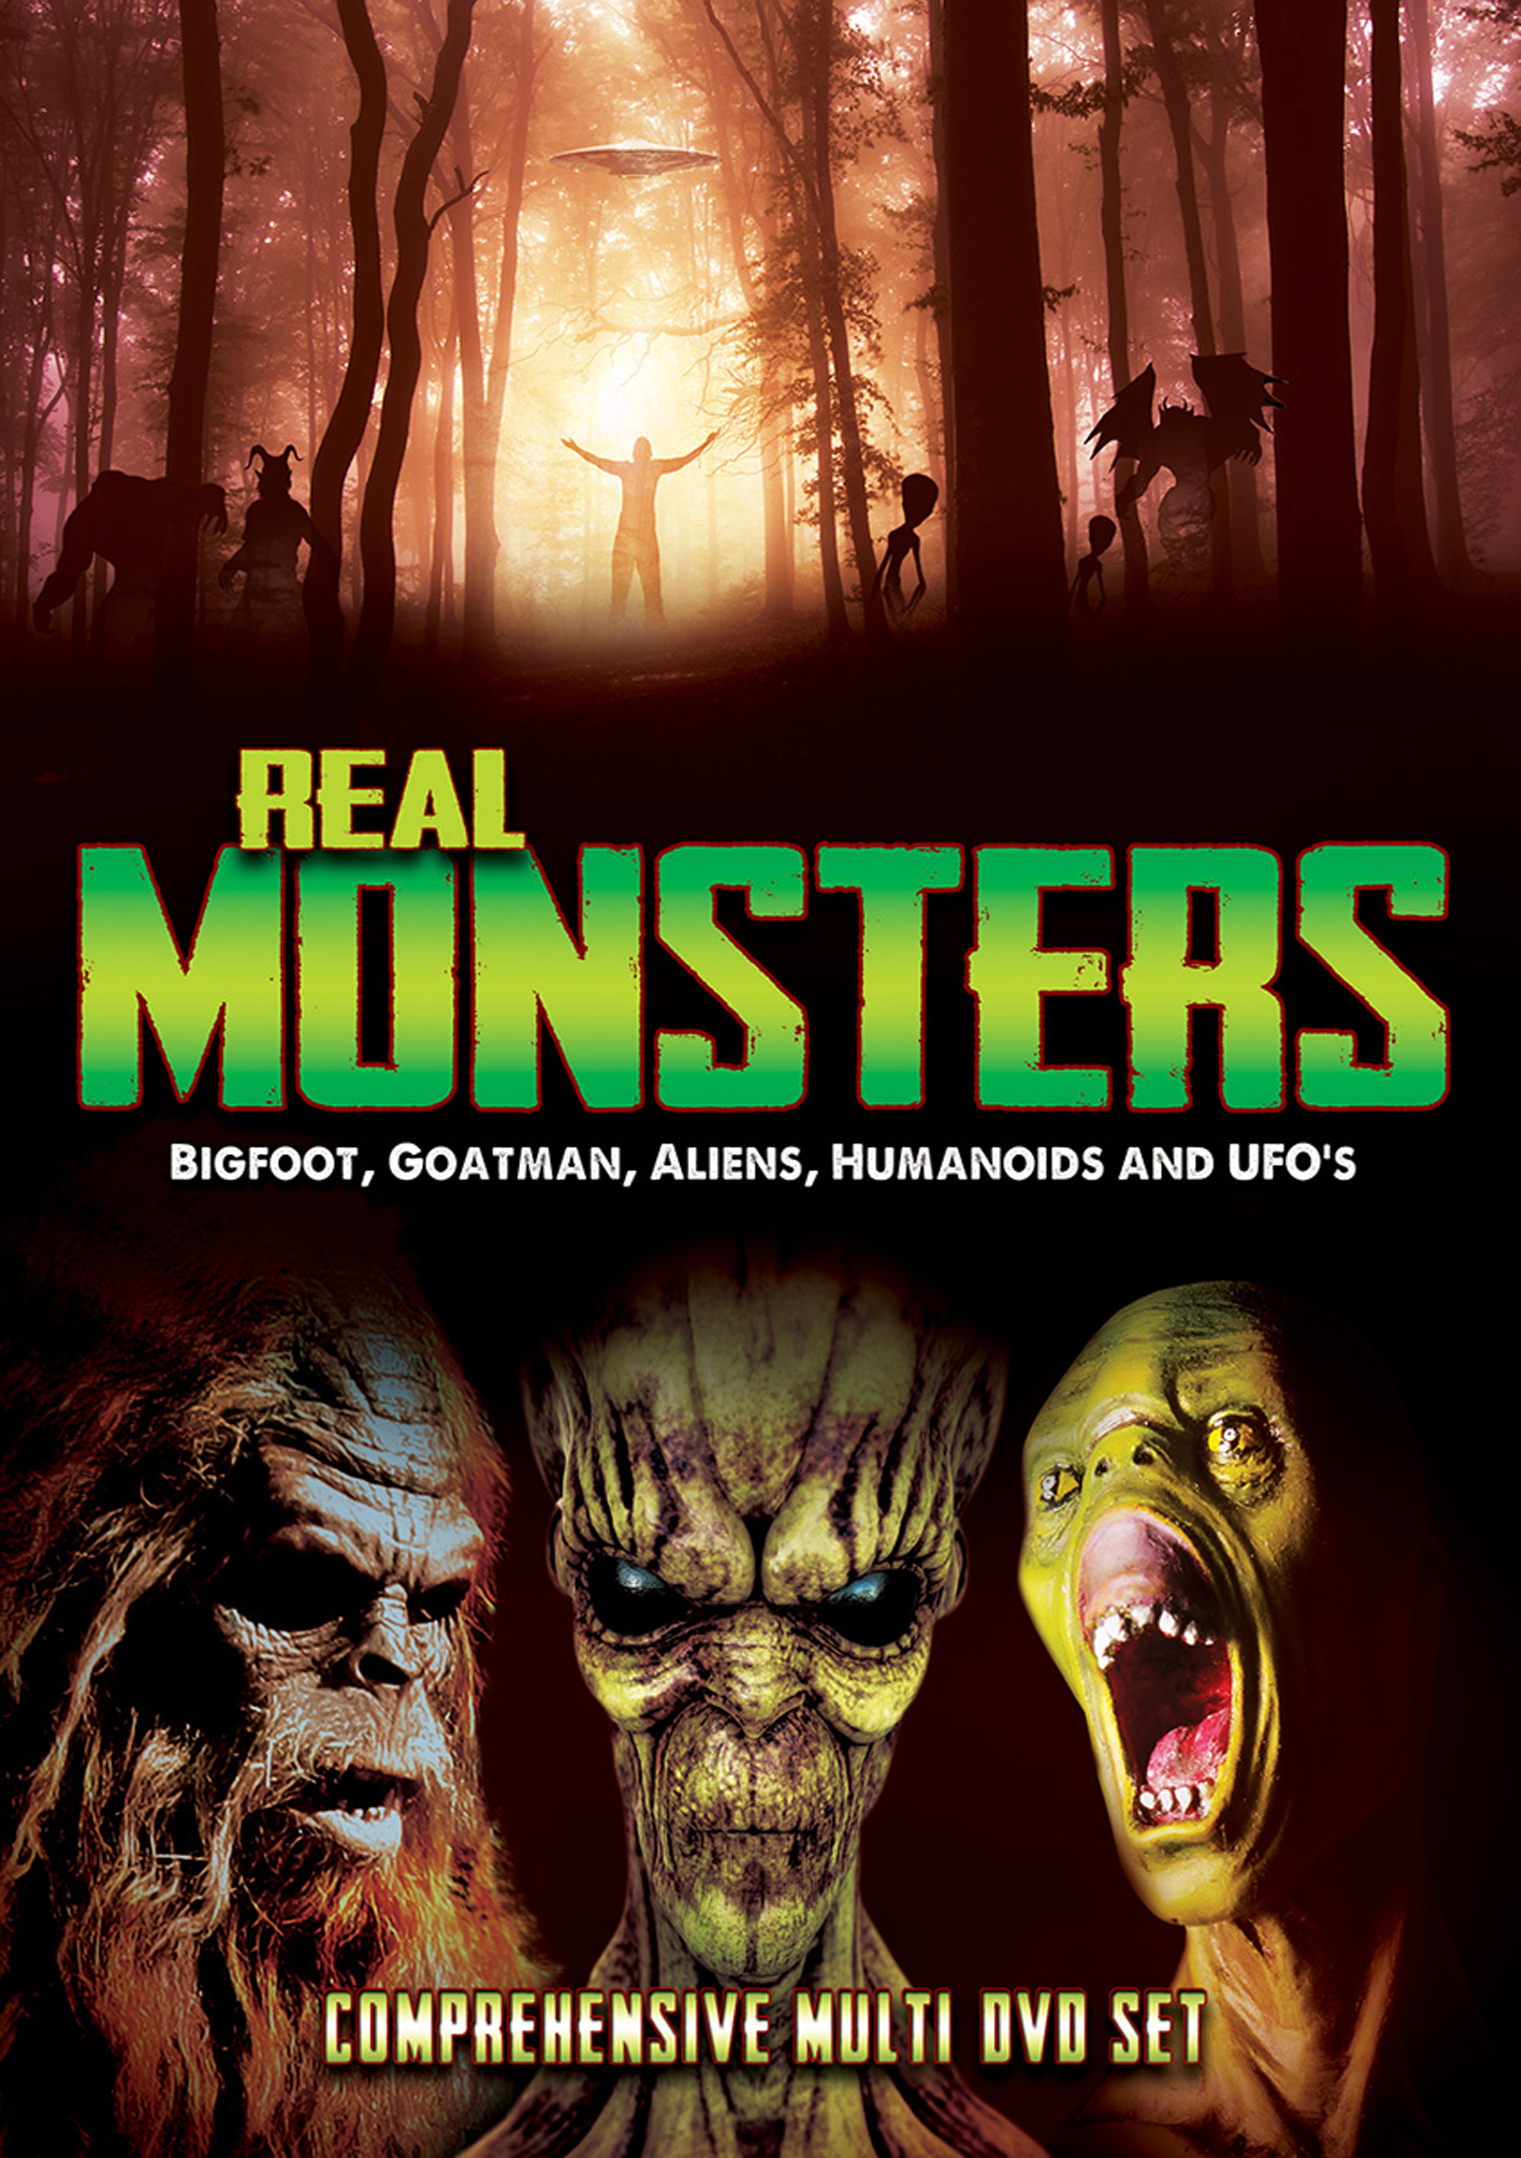 Monsters vs Aliens: Creature Features (2014) - Trakt